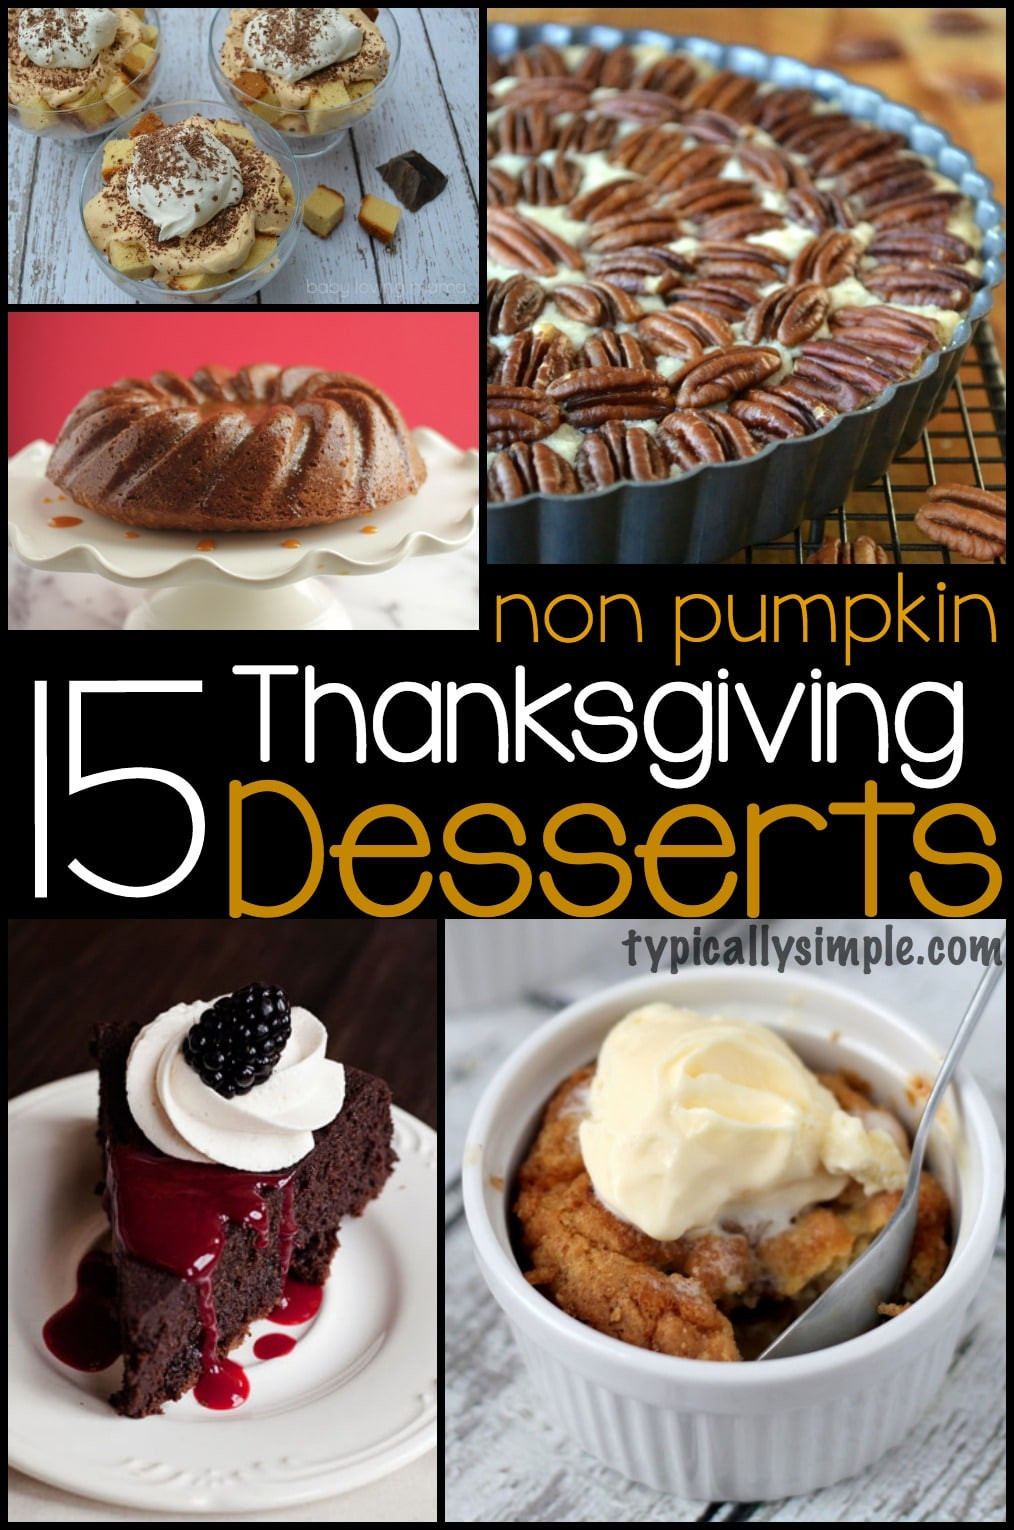 Non Traditional Thanksgiving Desserts
 15 Non Pumpkin Thanksgiving Desserts Typically Simple